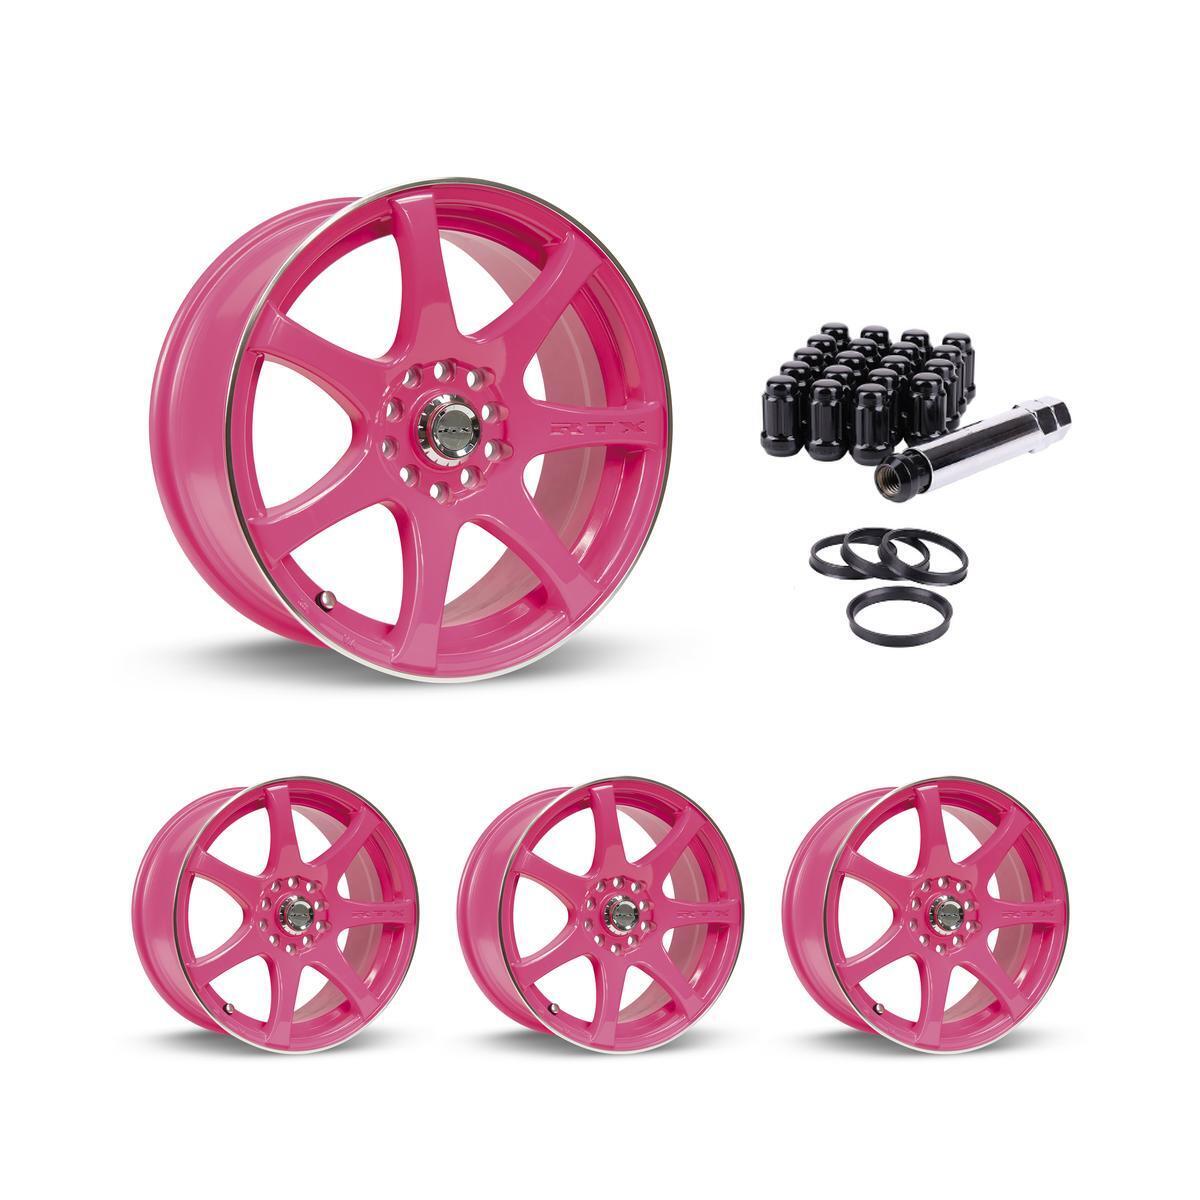 Wheel Rims Set with Black Lug Nuts Kit for 90-03 Mazda Protege P814017 15 inch